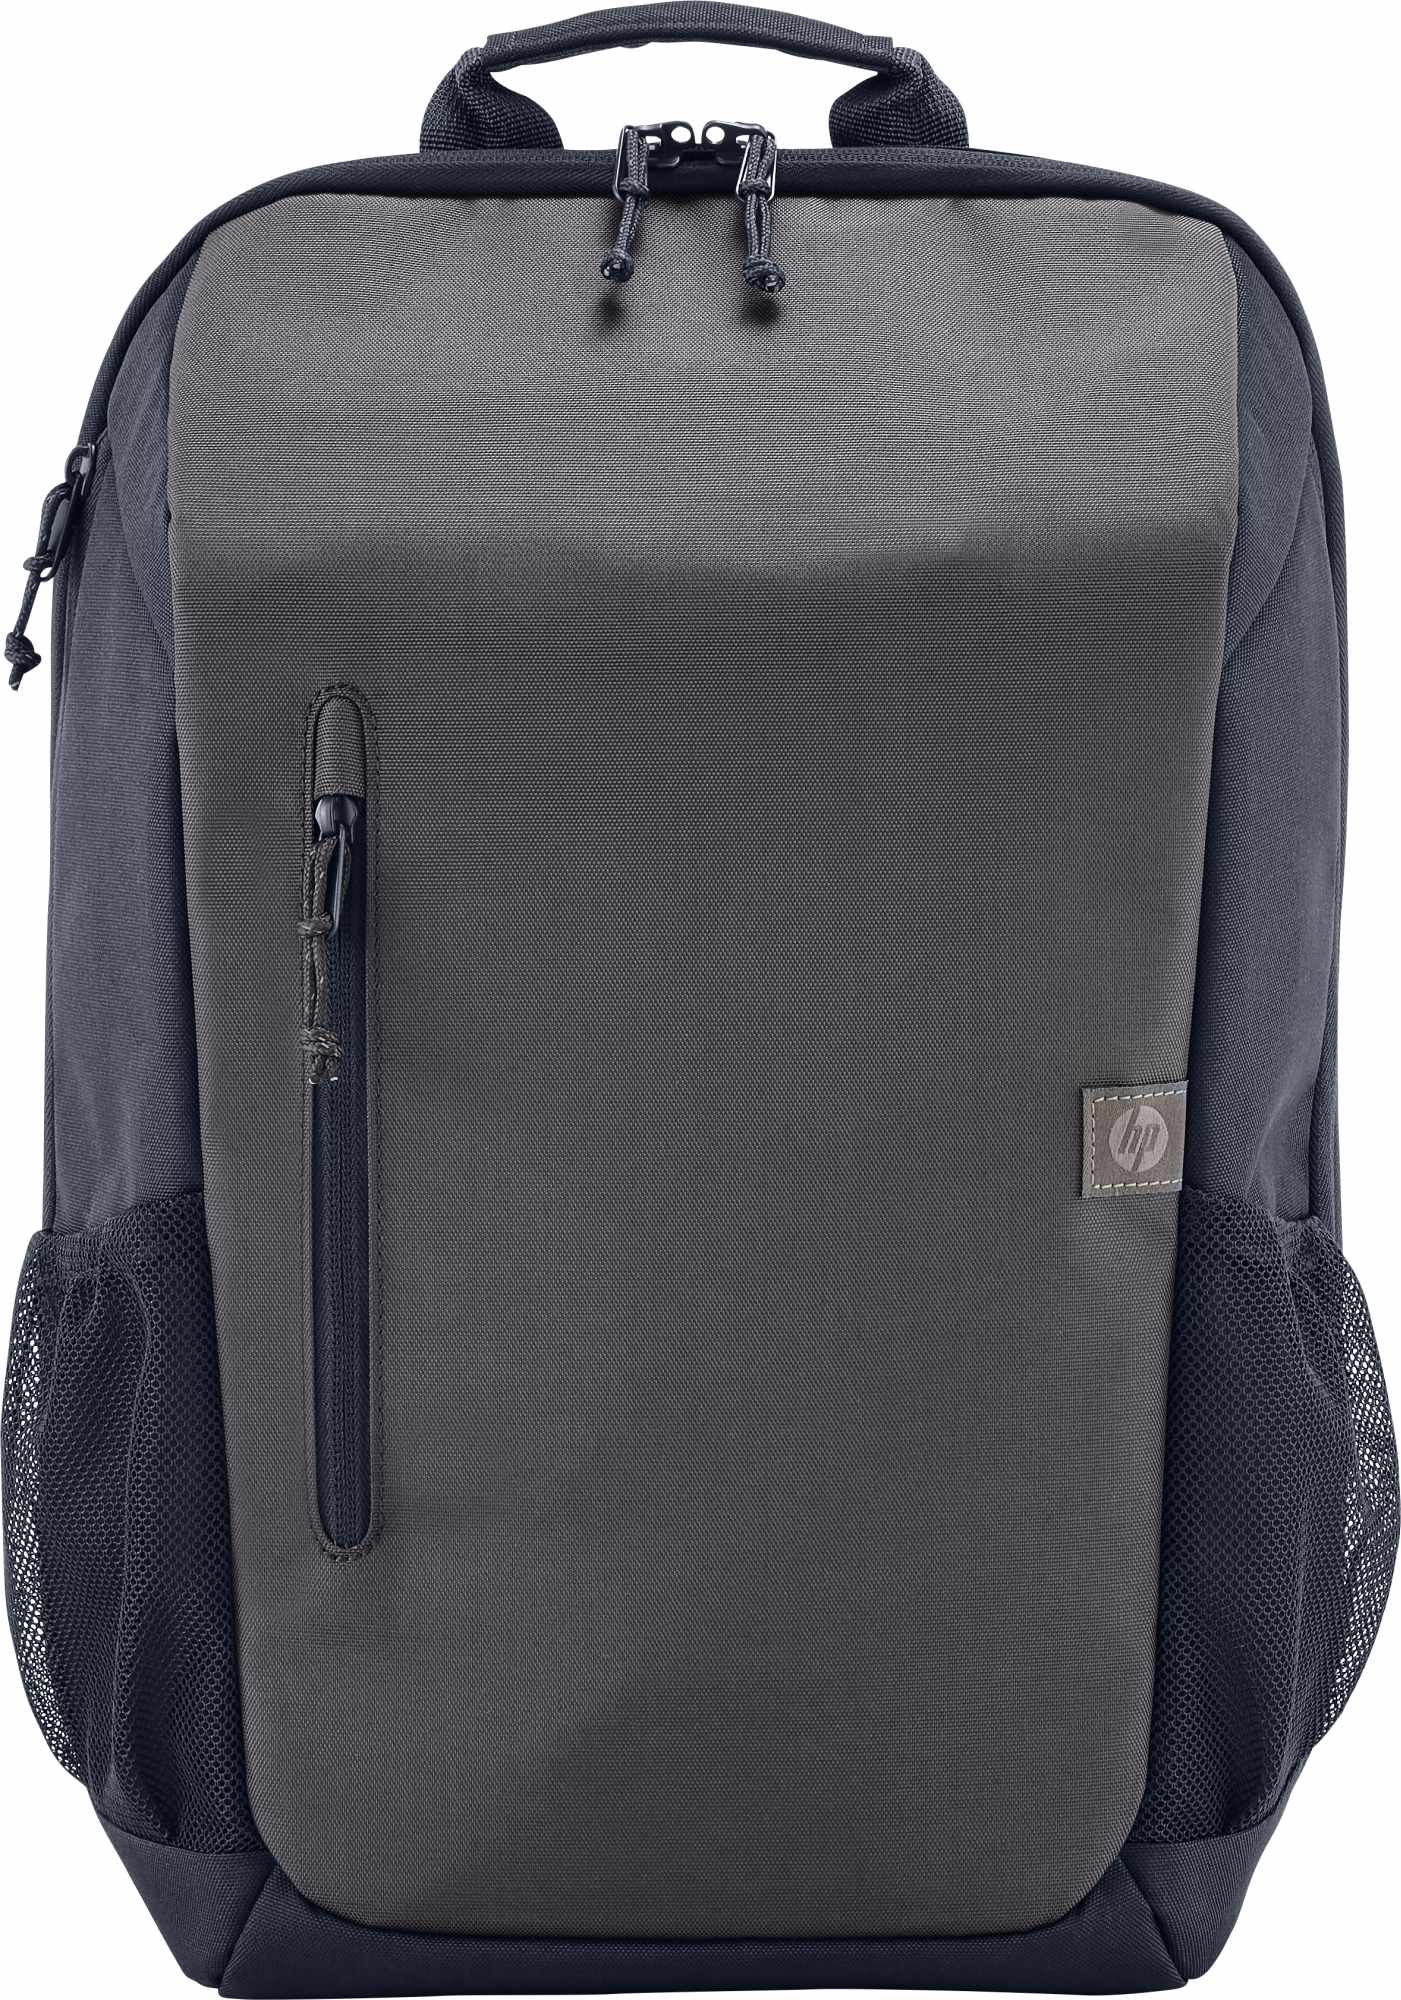 HP Travel 18L 15.6 Laptop Backpack BPk/Grey 6H2D9AA HP Travel 18 Liter 15.6 Iron GreyLaptop Backpack